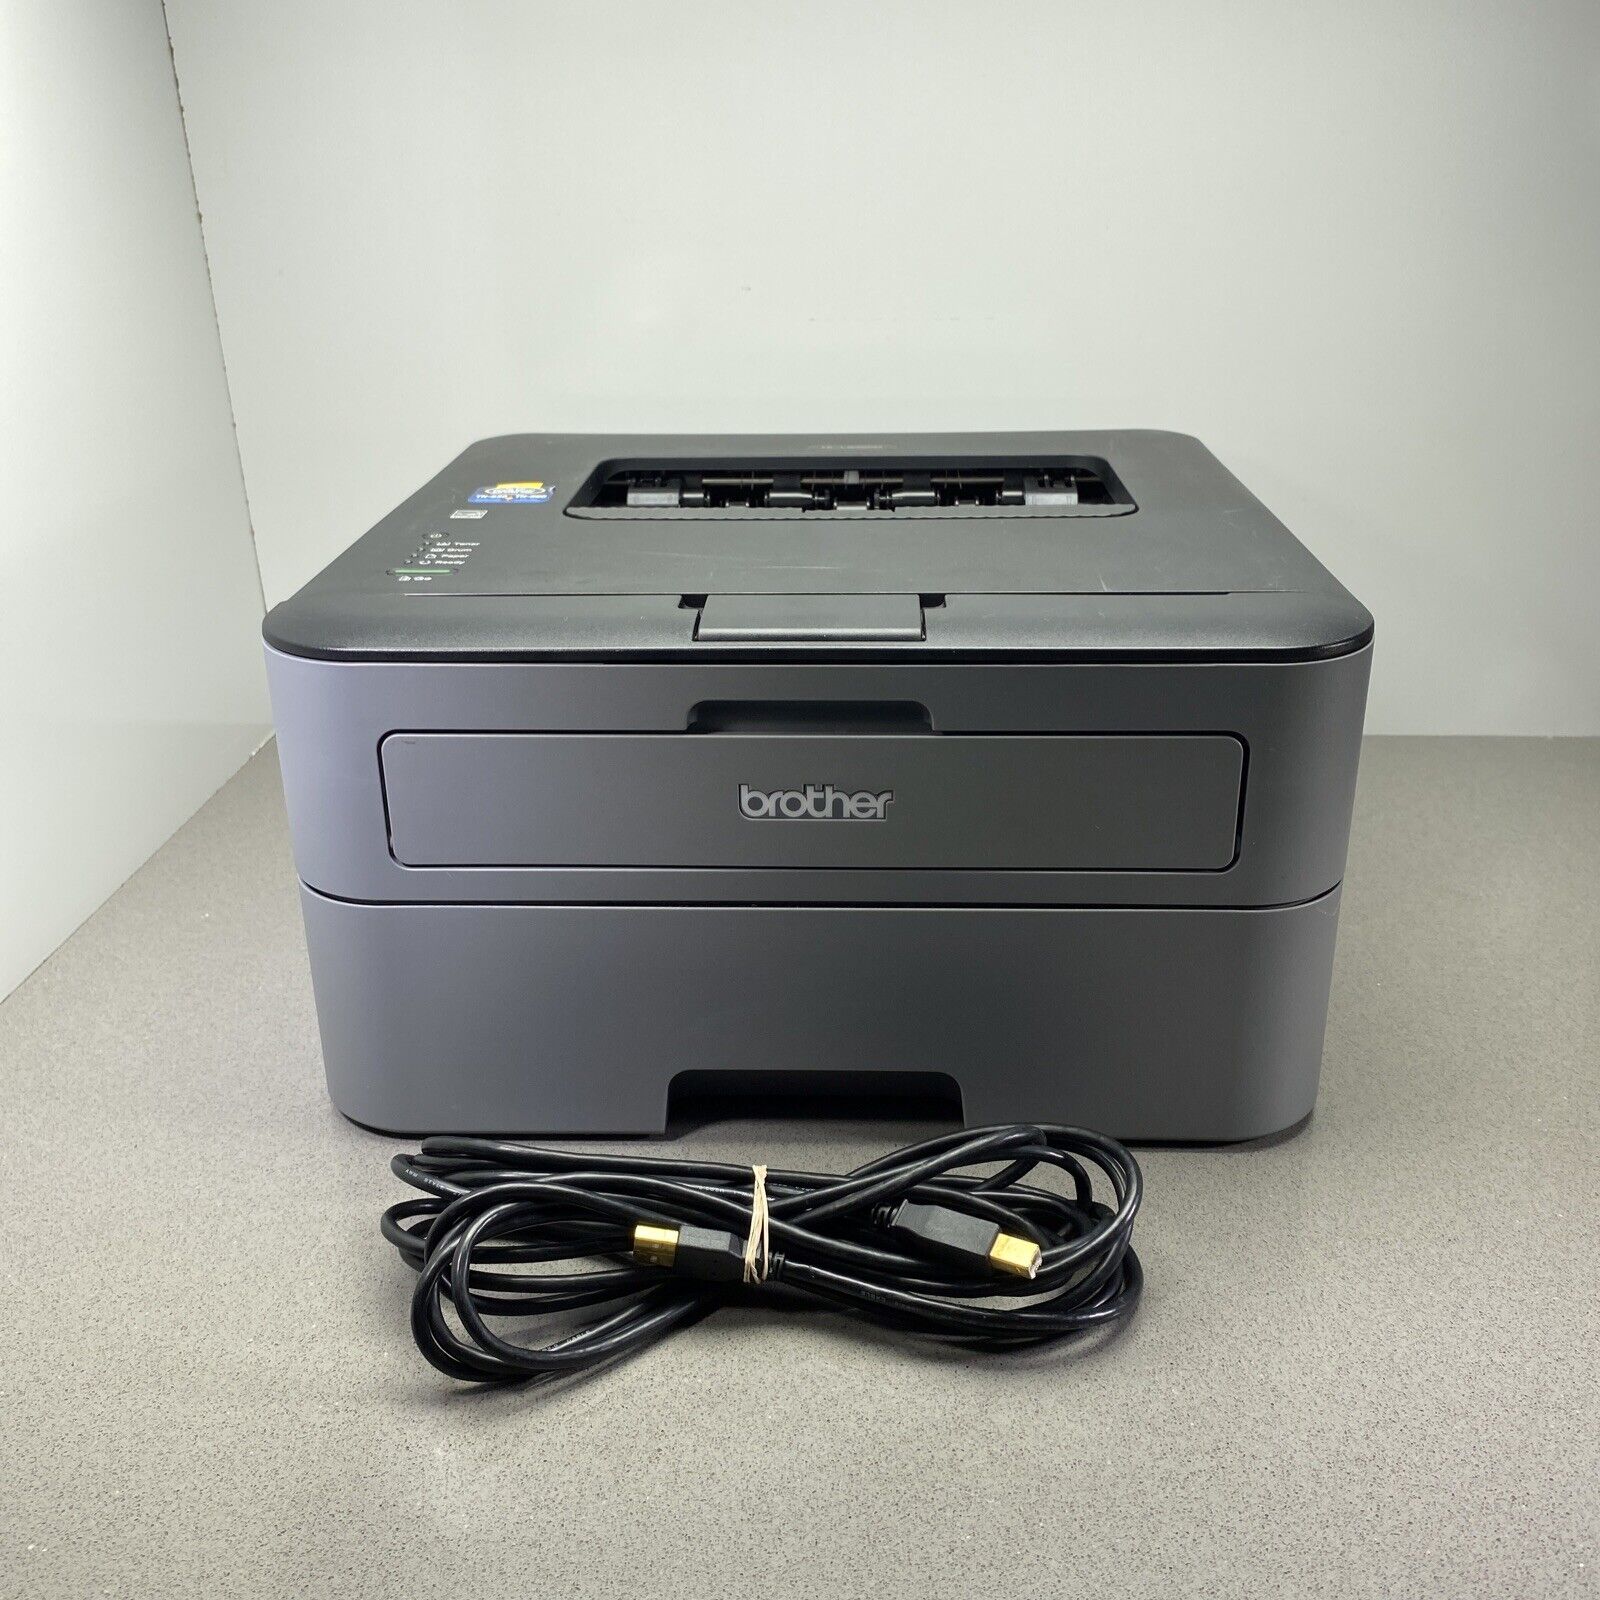 Brother HL-L2320D Black And White Monochrome Laser Printer. No Toner